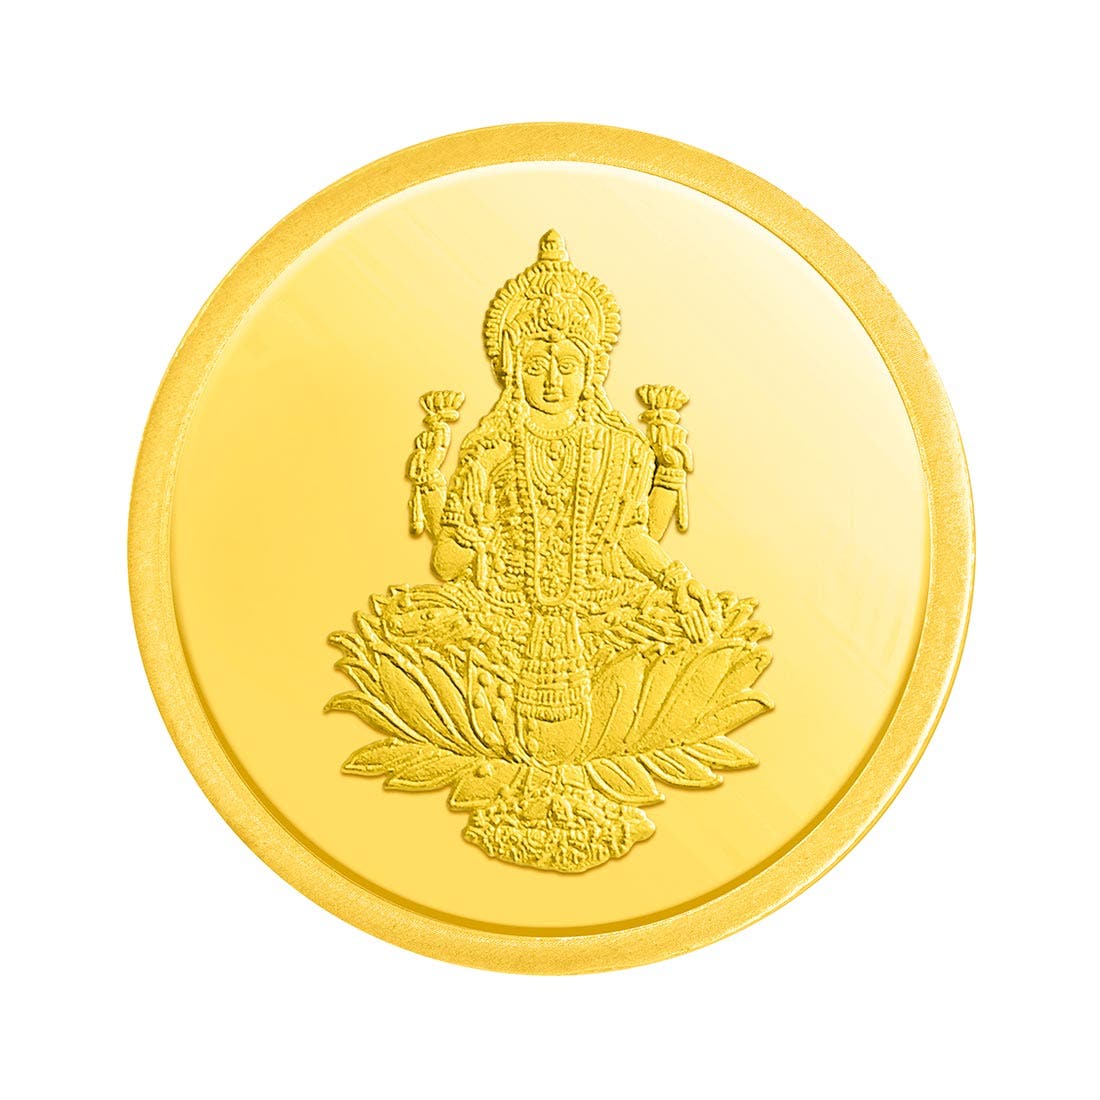  10 grams 24k (999)  Gold Lakshmi  Coin